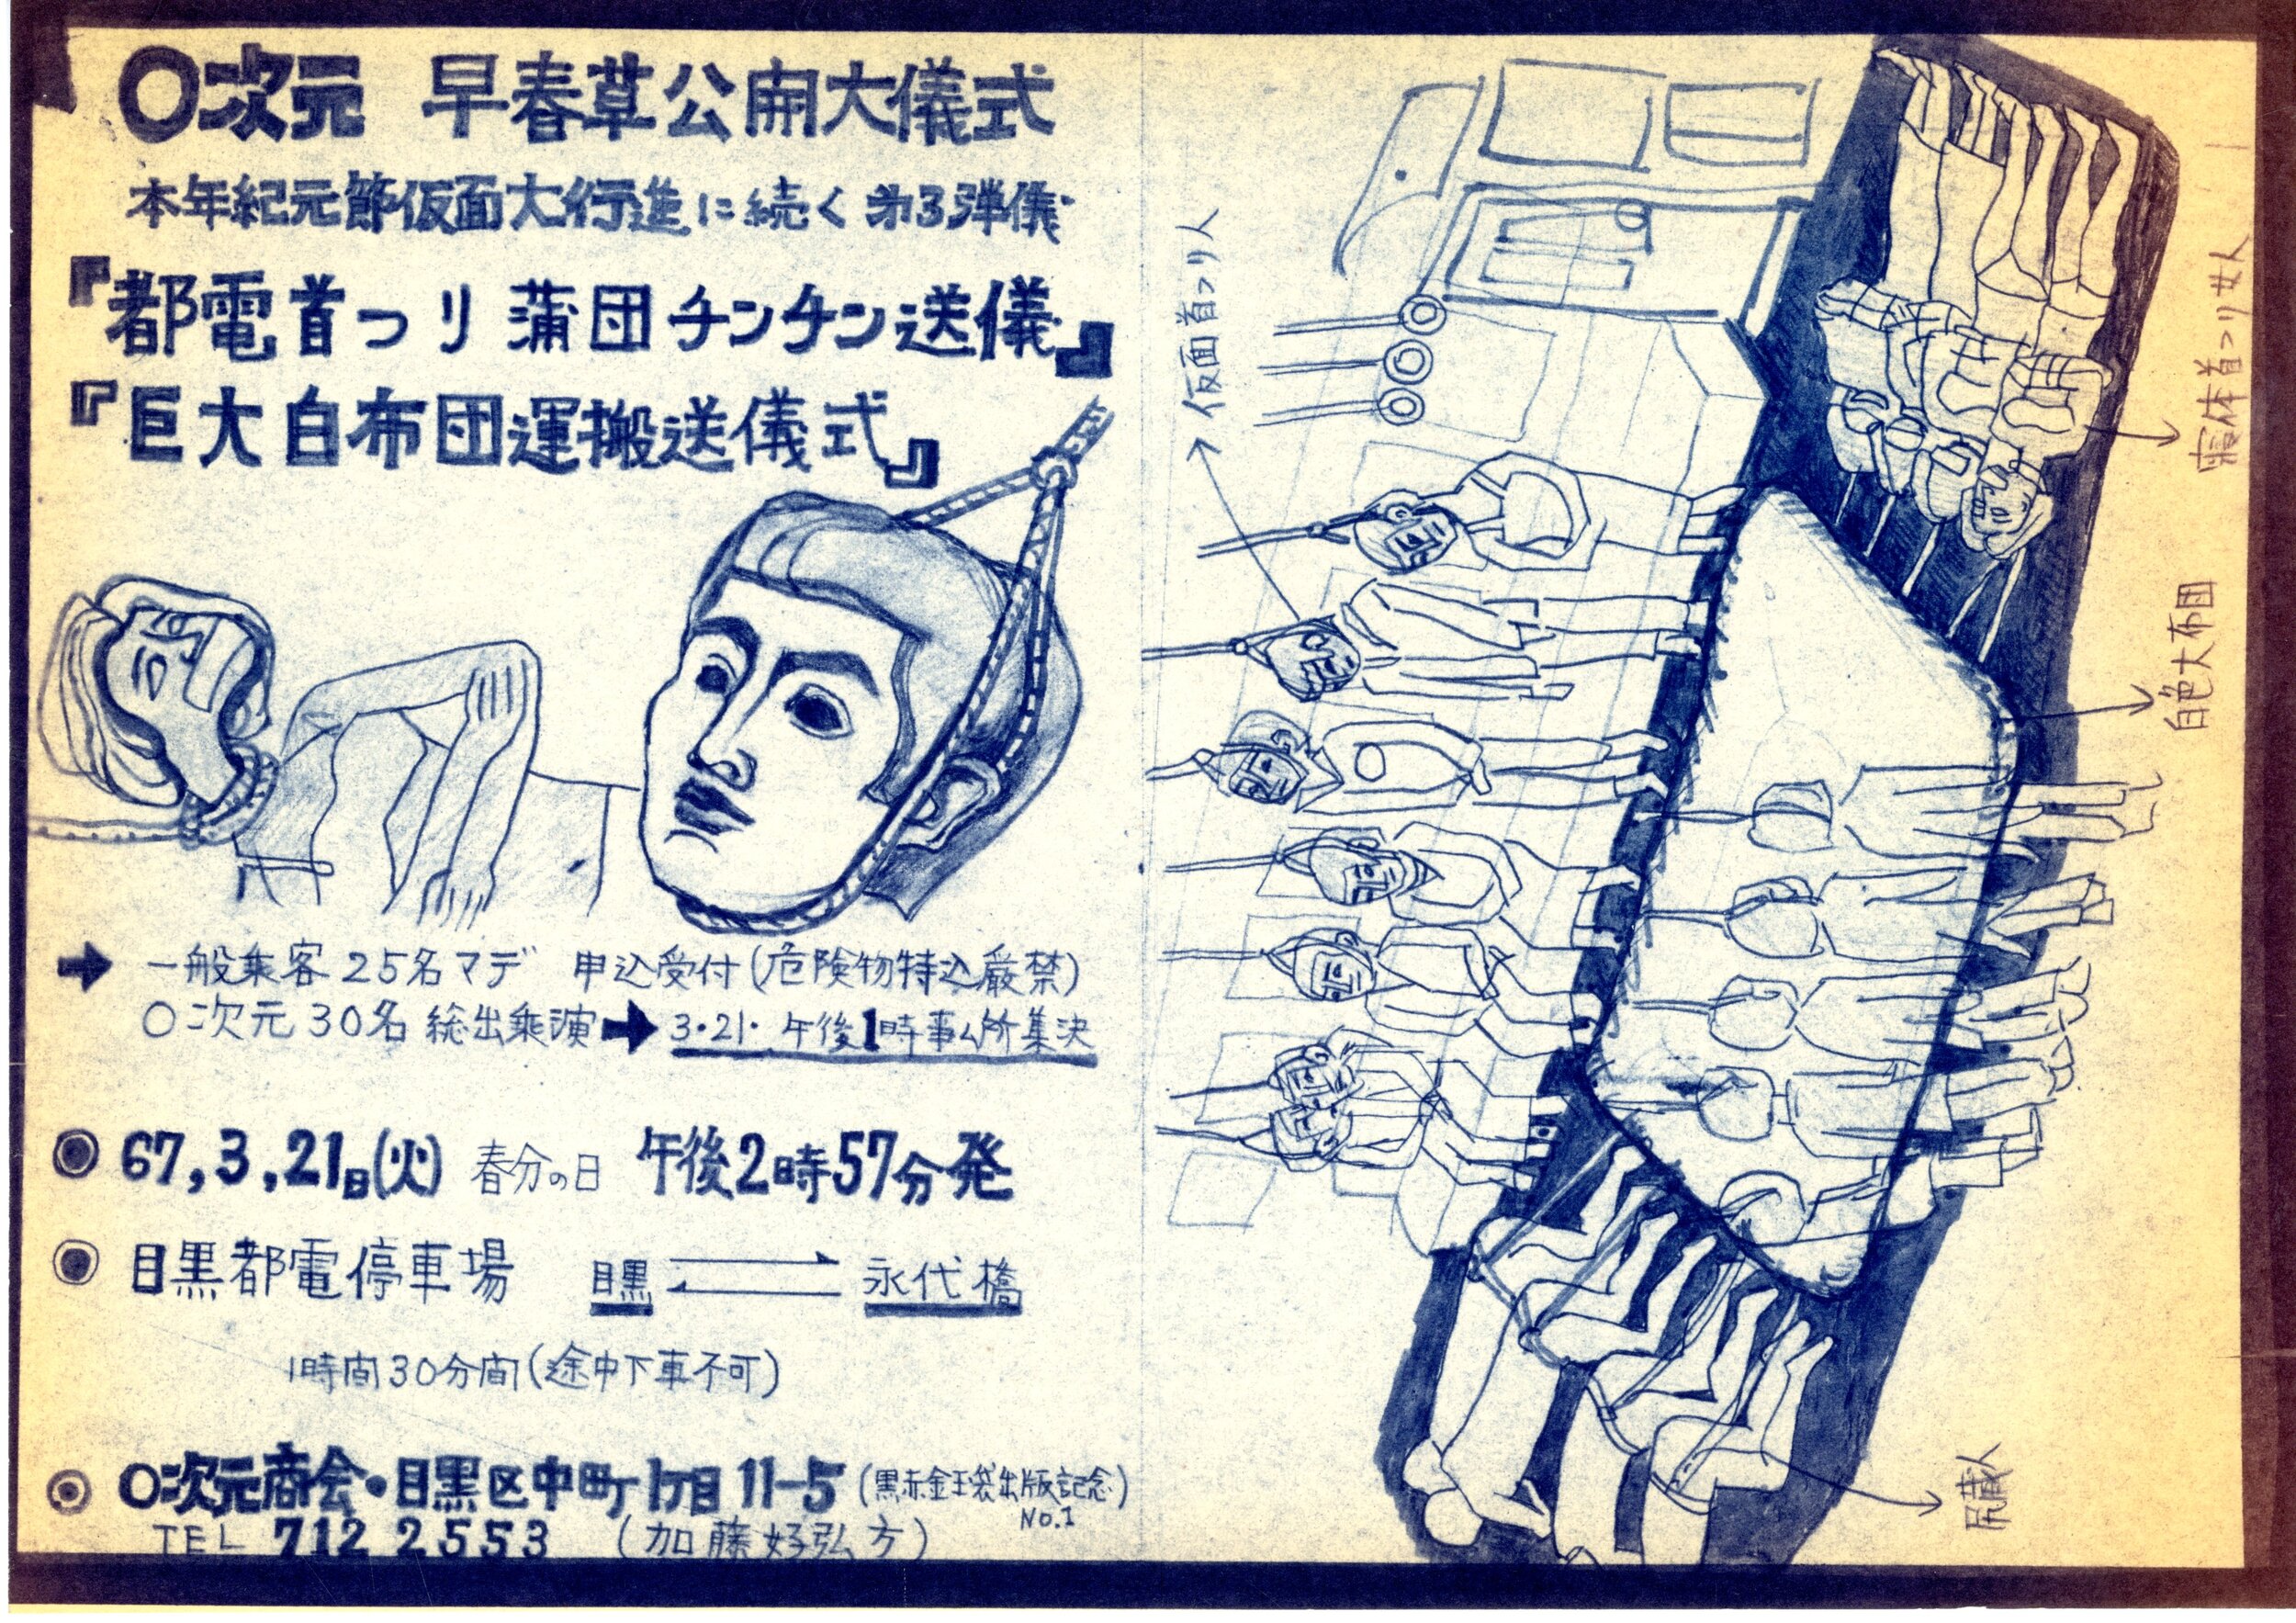  [fig. 6] Flyer for  Metropolitan Chinchin Streetcar Funeral with Hanging Nooses and Futon , March 21, 1967. © Zero Jigen Katō Yoshihiro Archive 